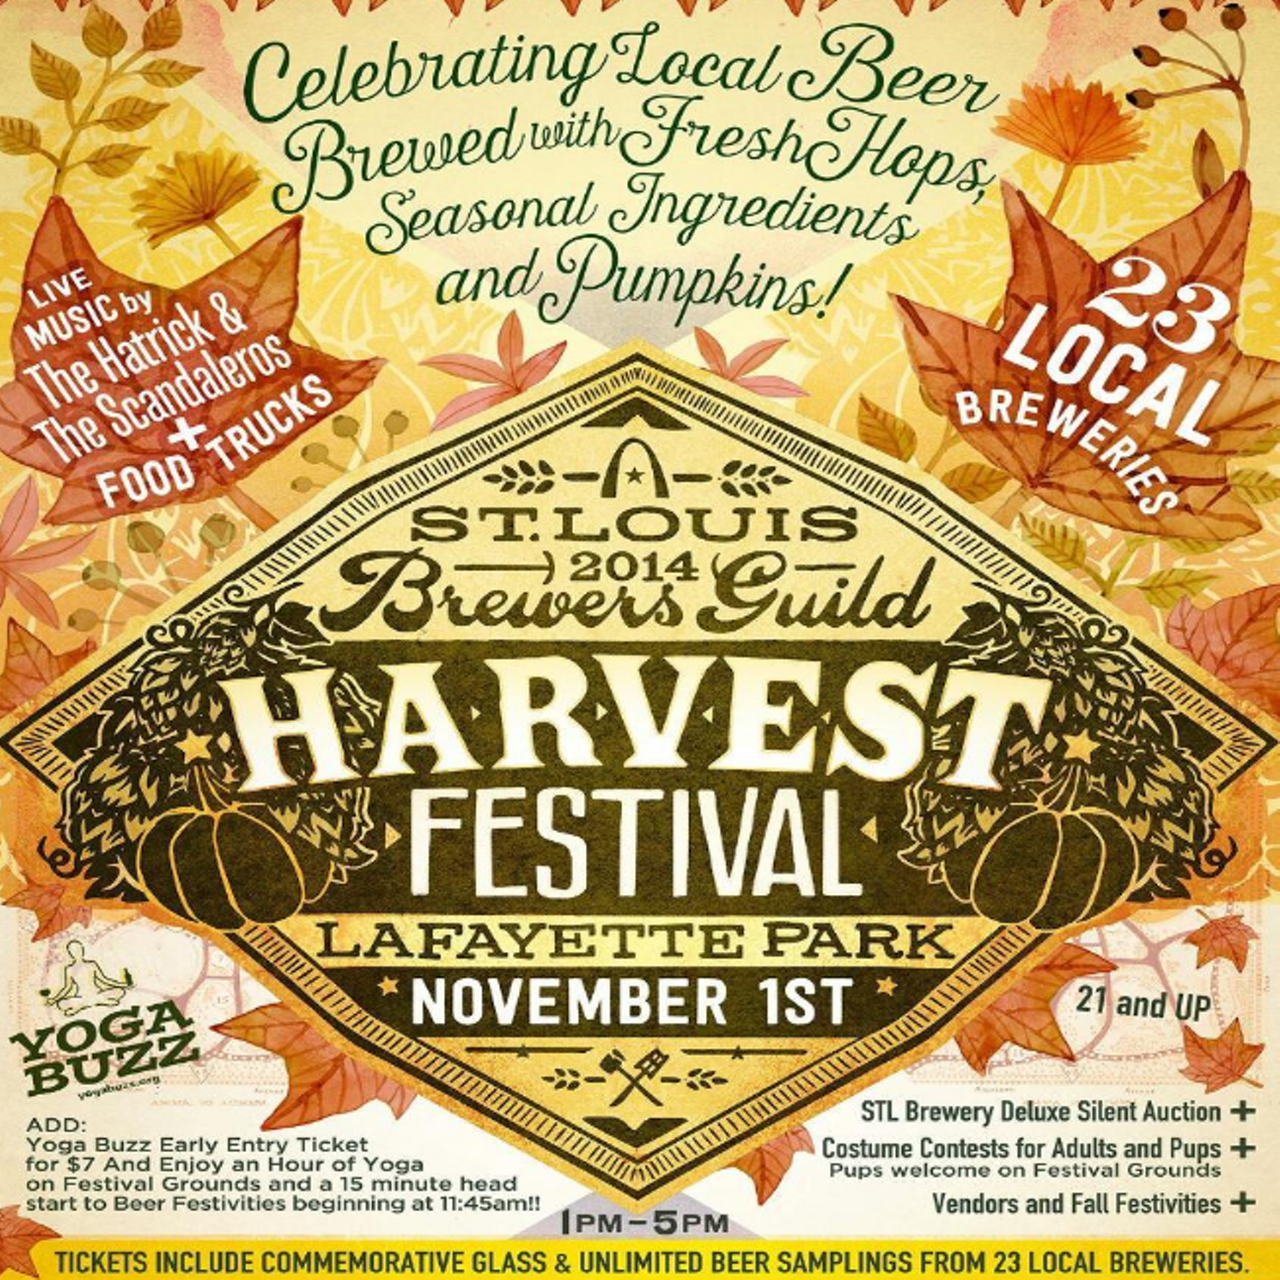 Brewers' Guild Harvest Festival